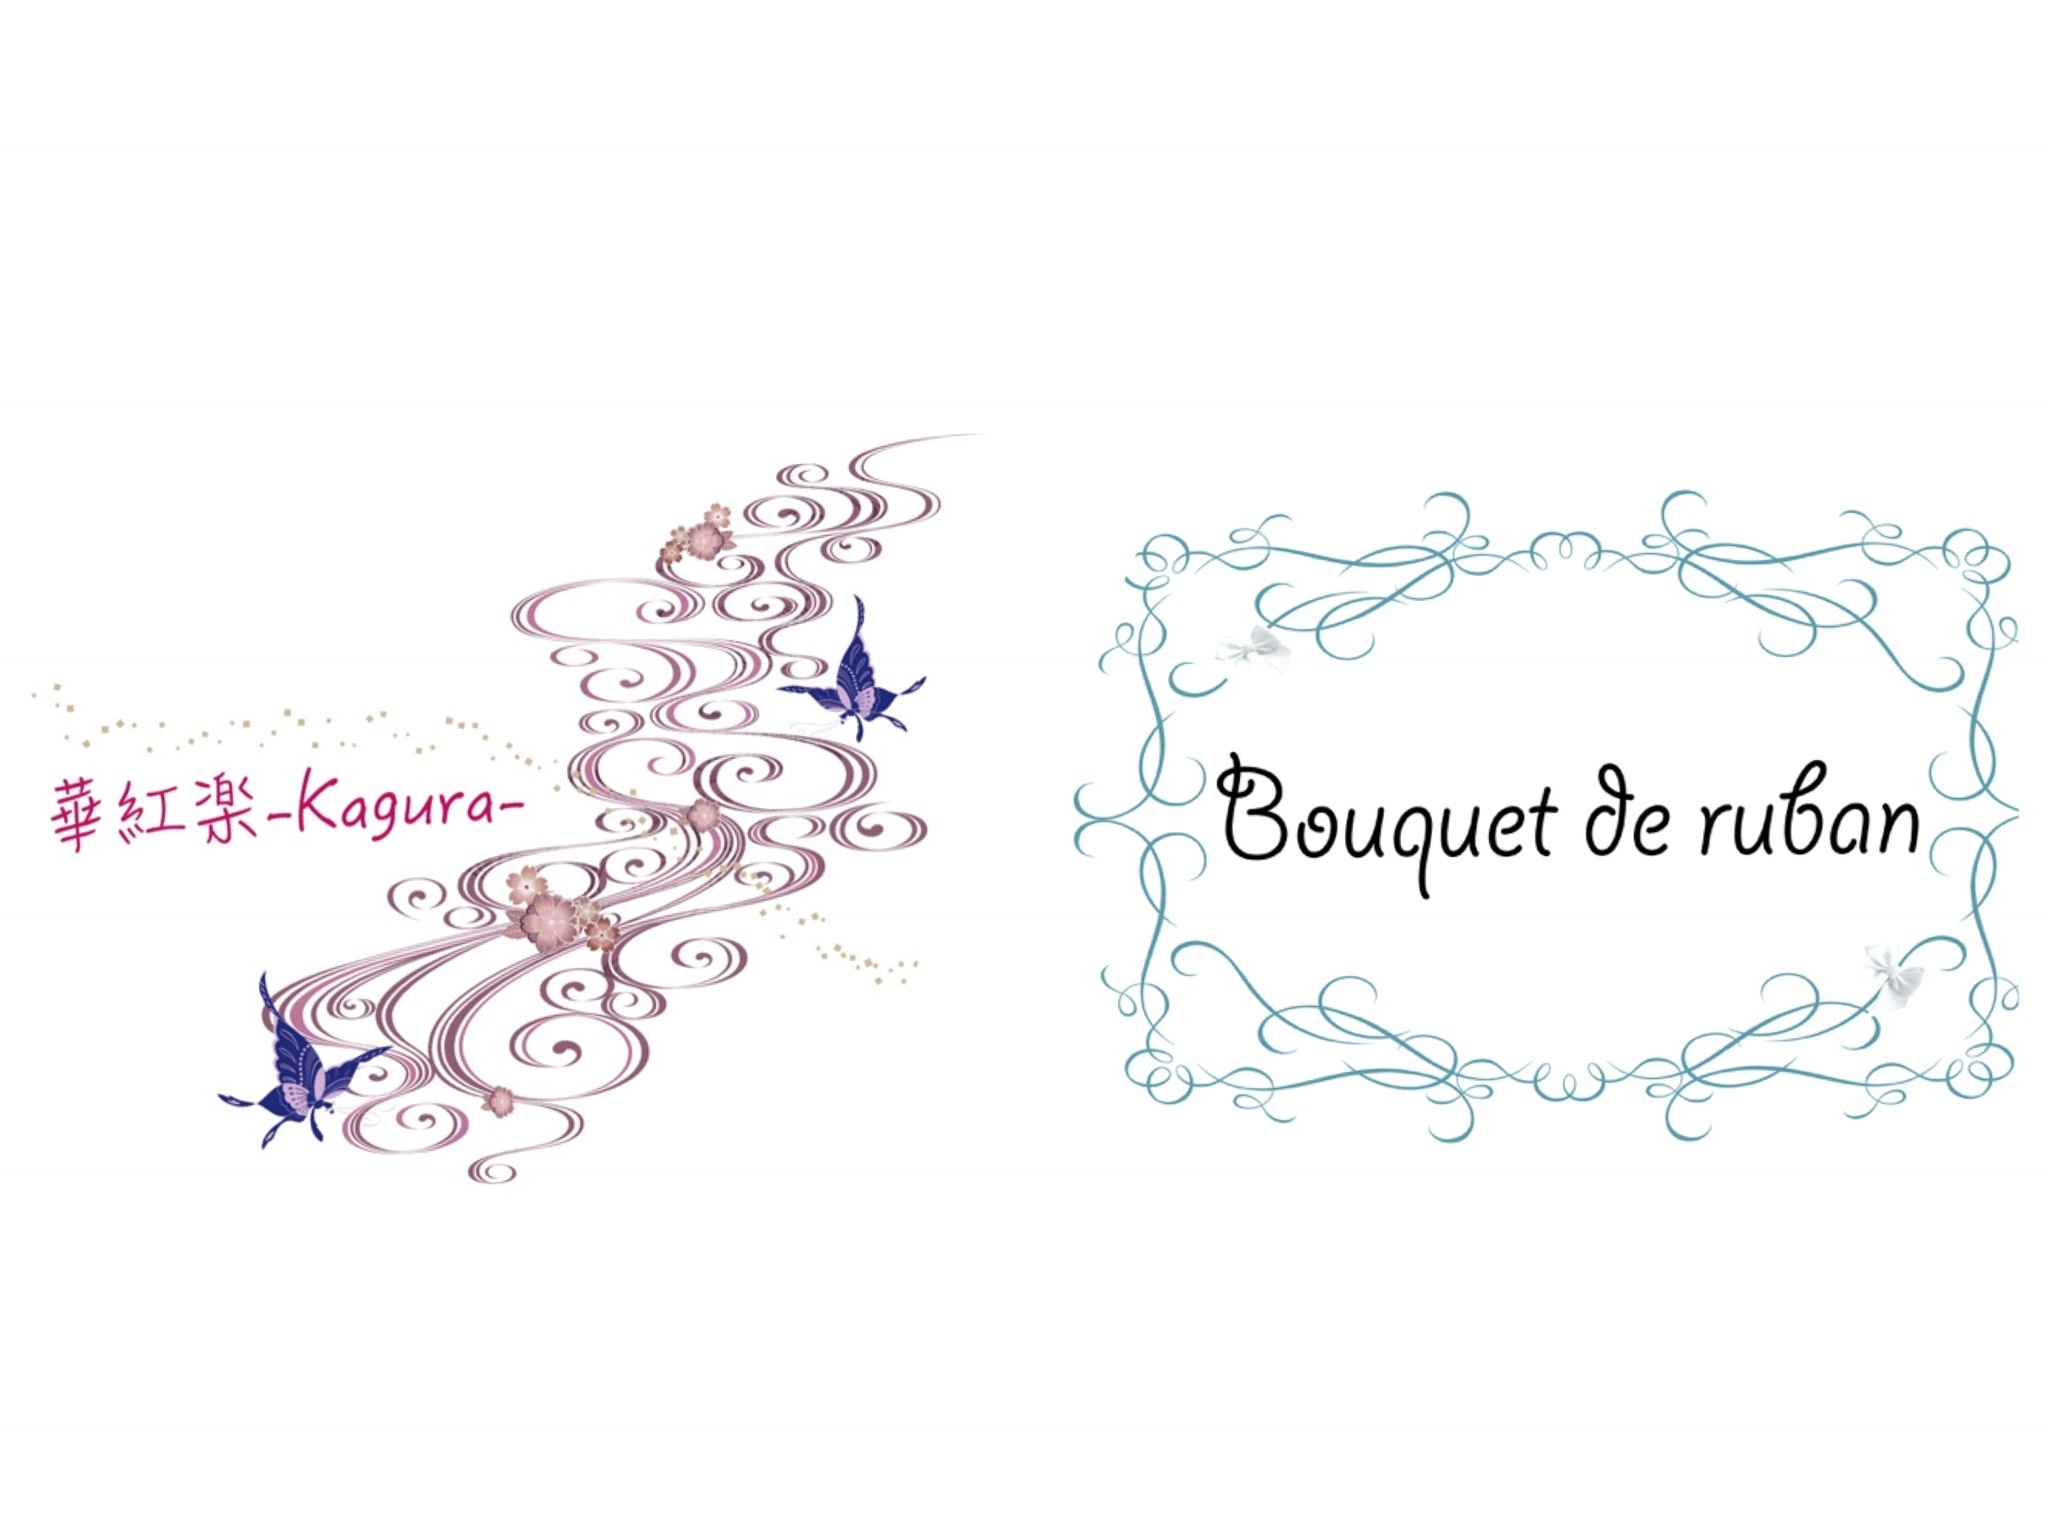 Bouquet de ruban&華紅楽-kagura-